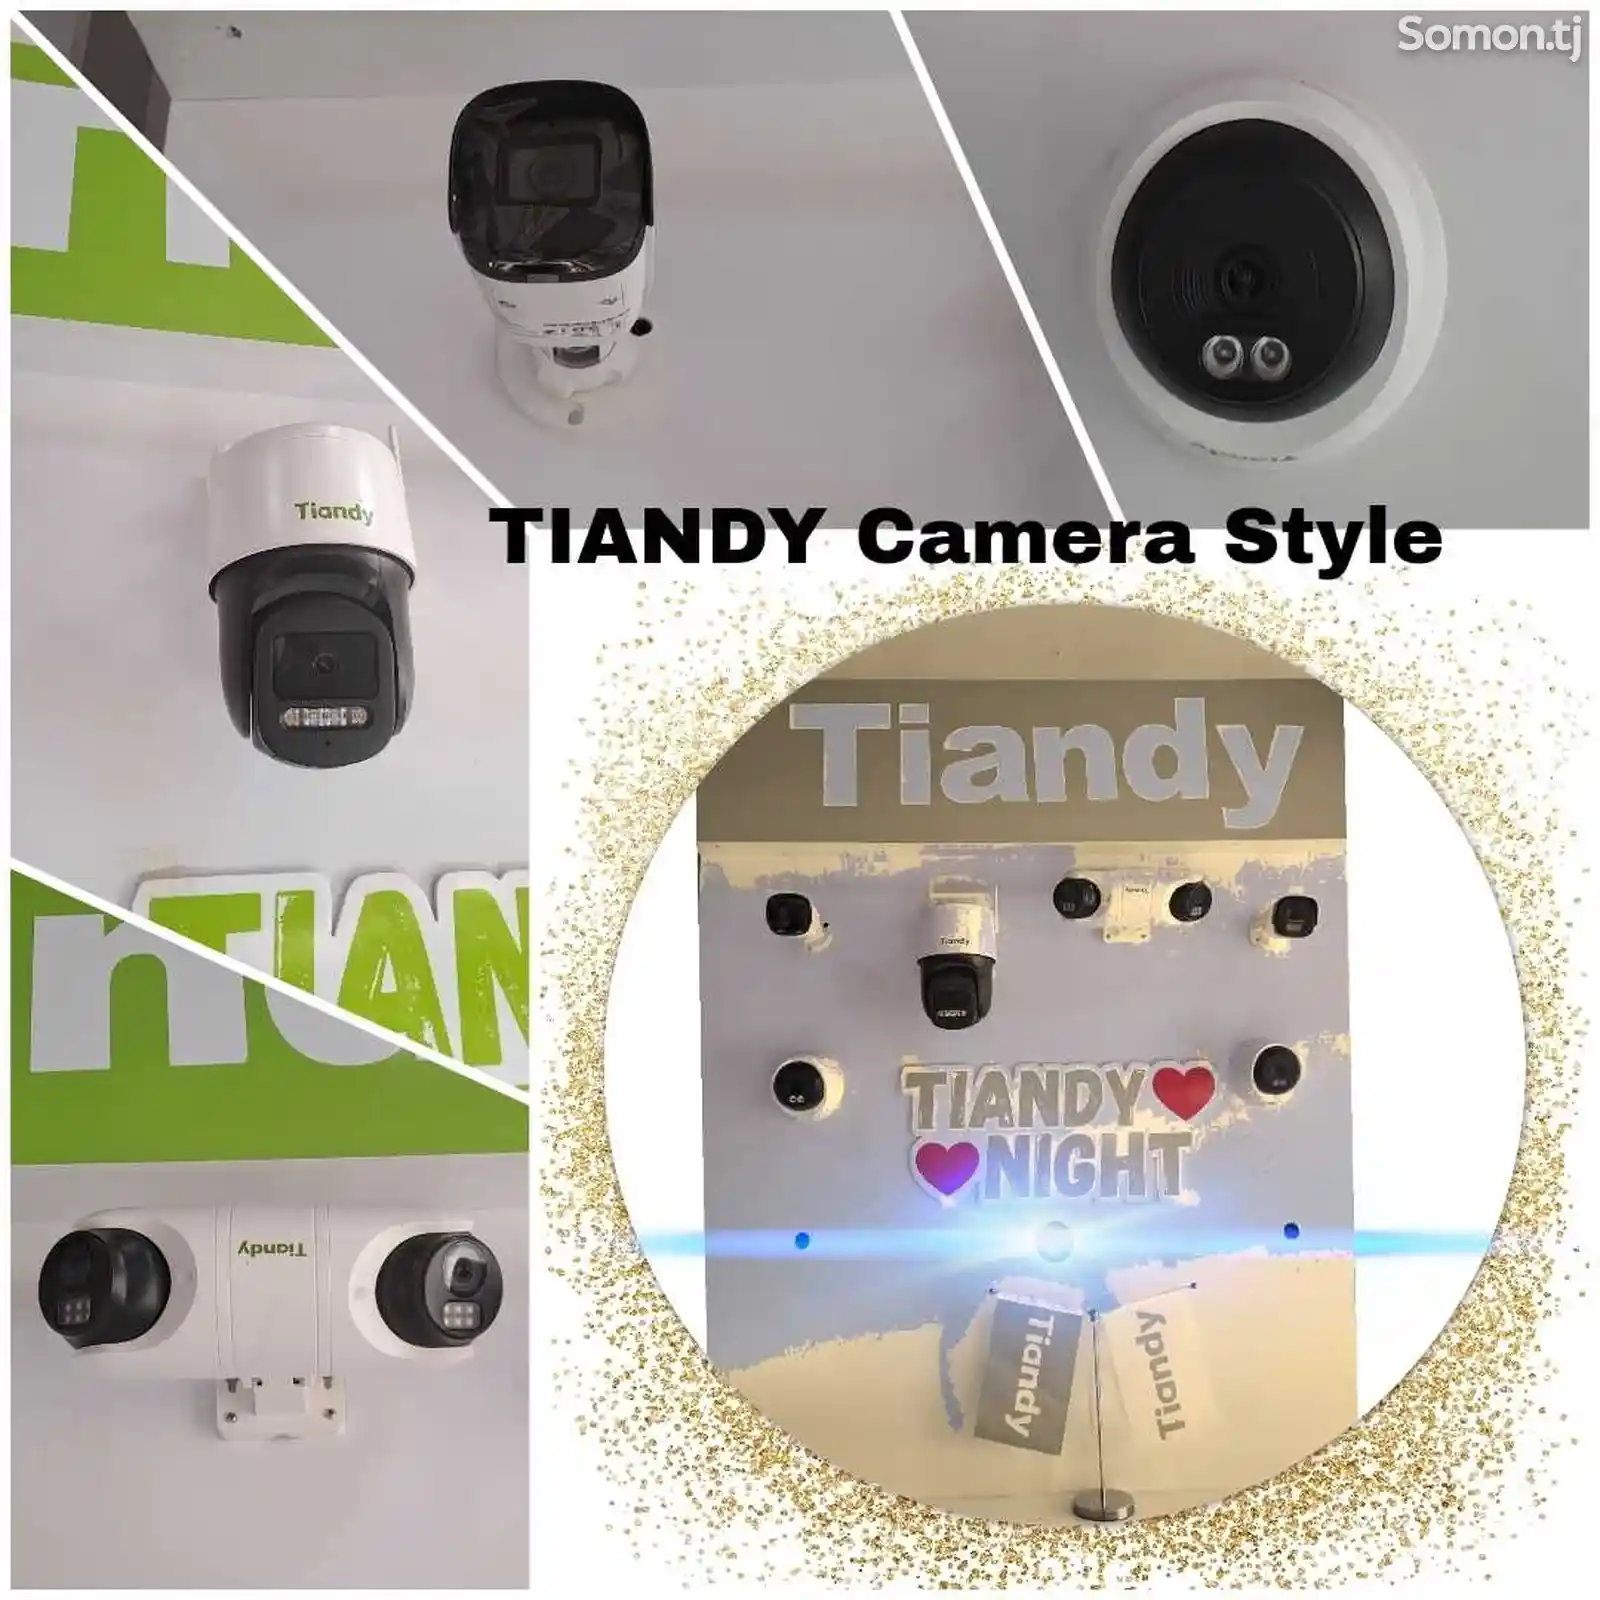 Tiandy Camera Style-3